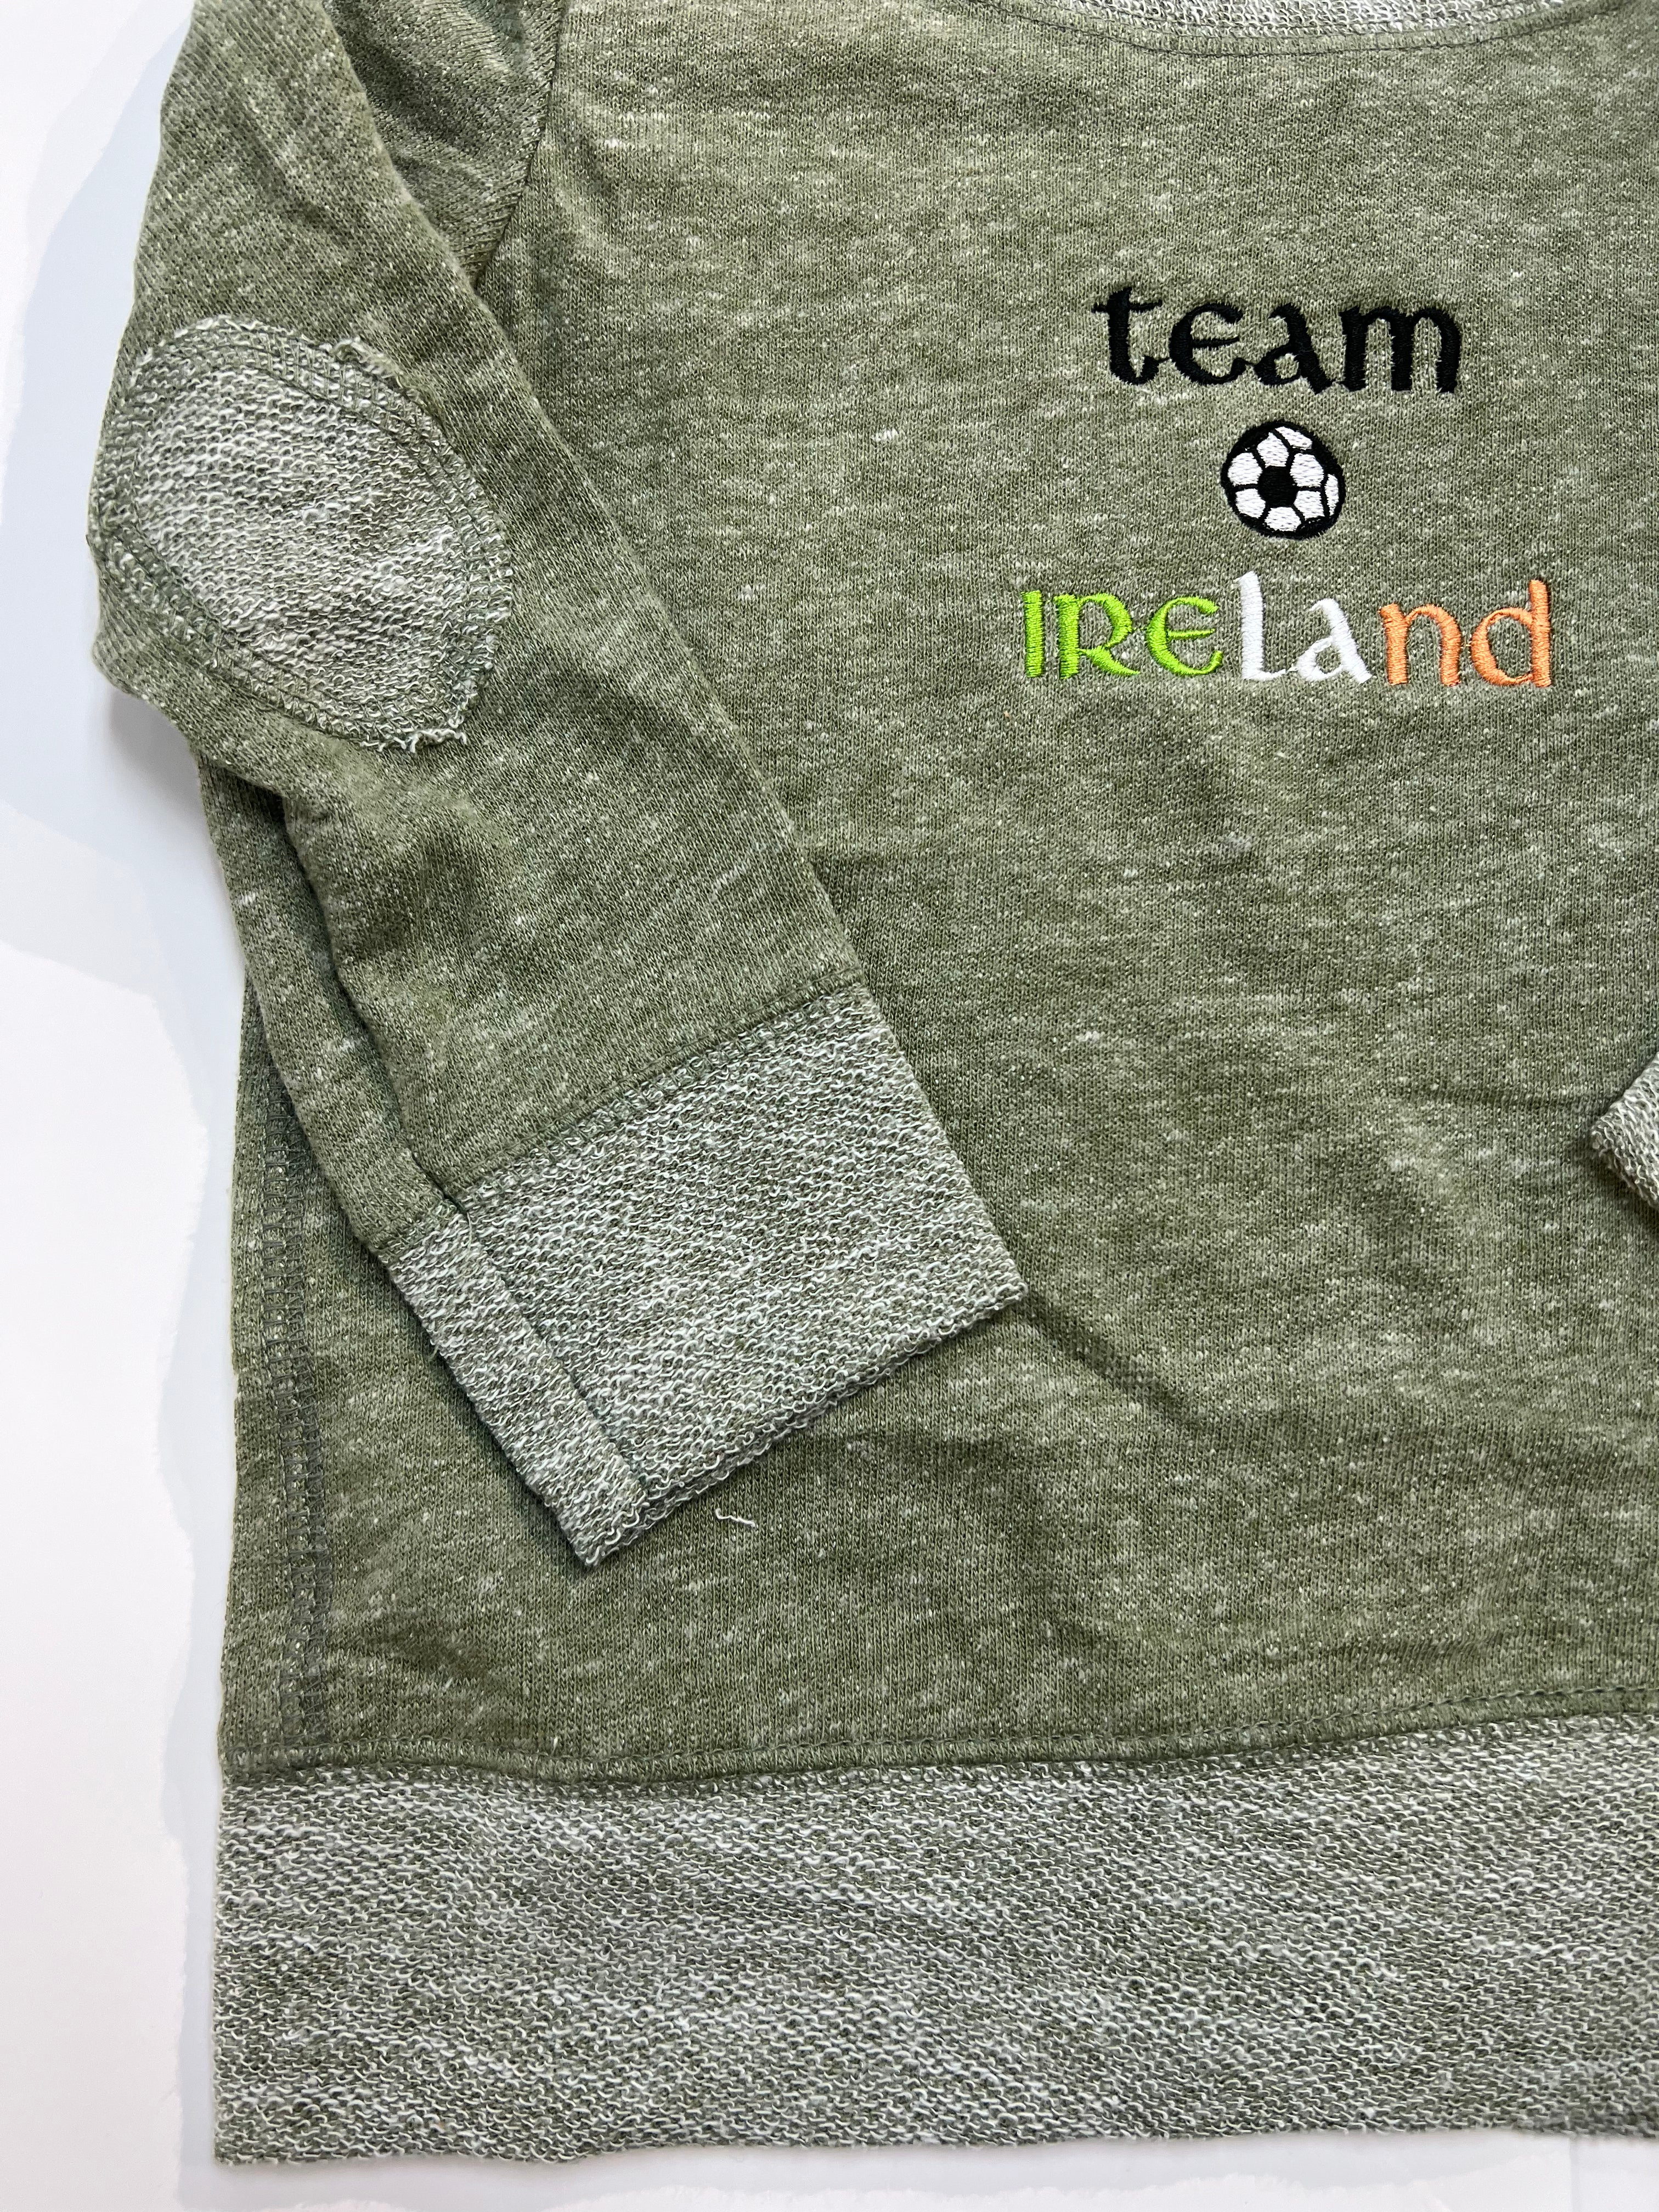 Toddler Crew neck sweater embroidered Team Ireland